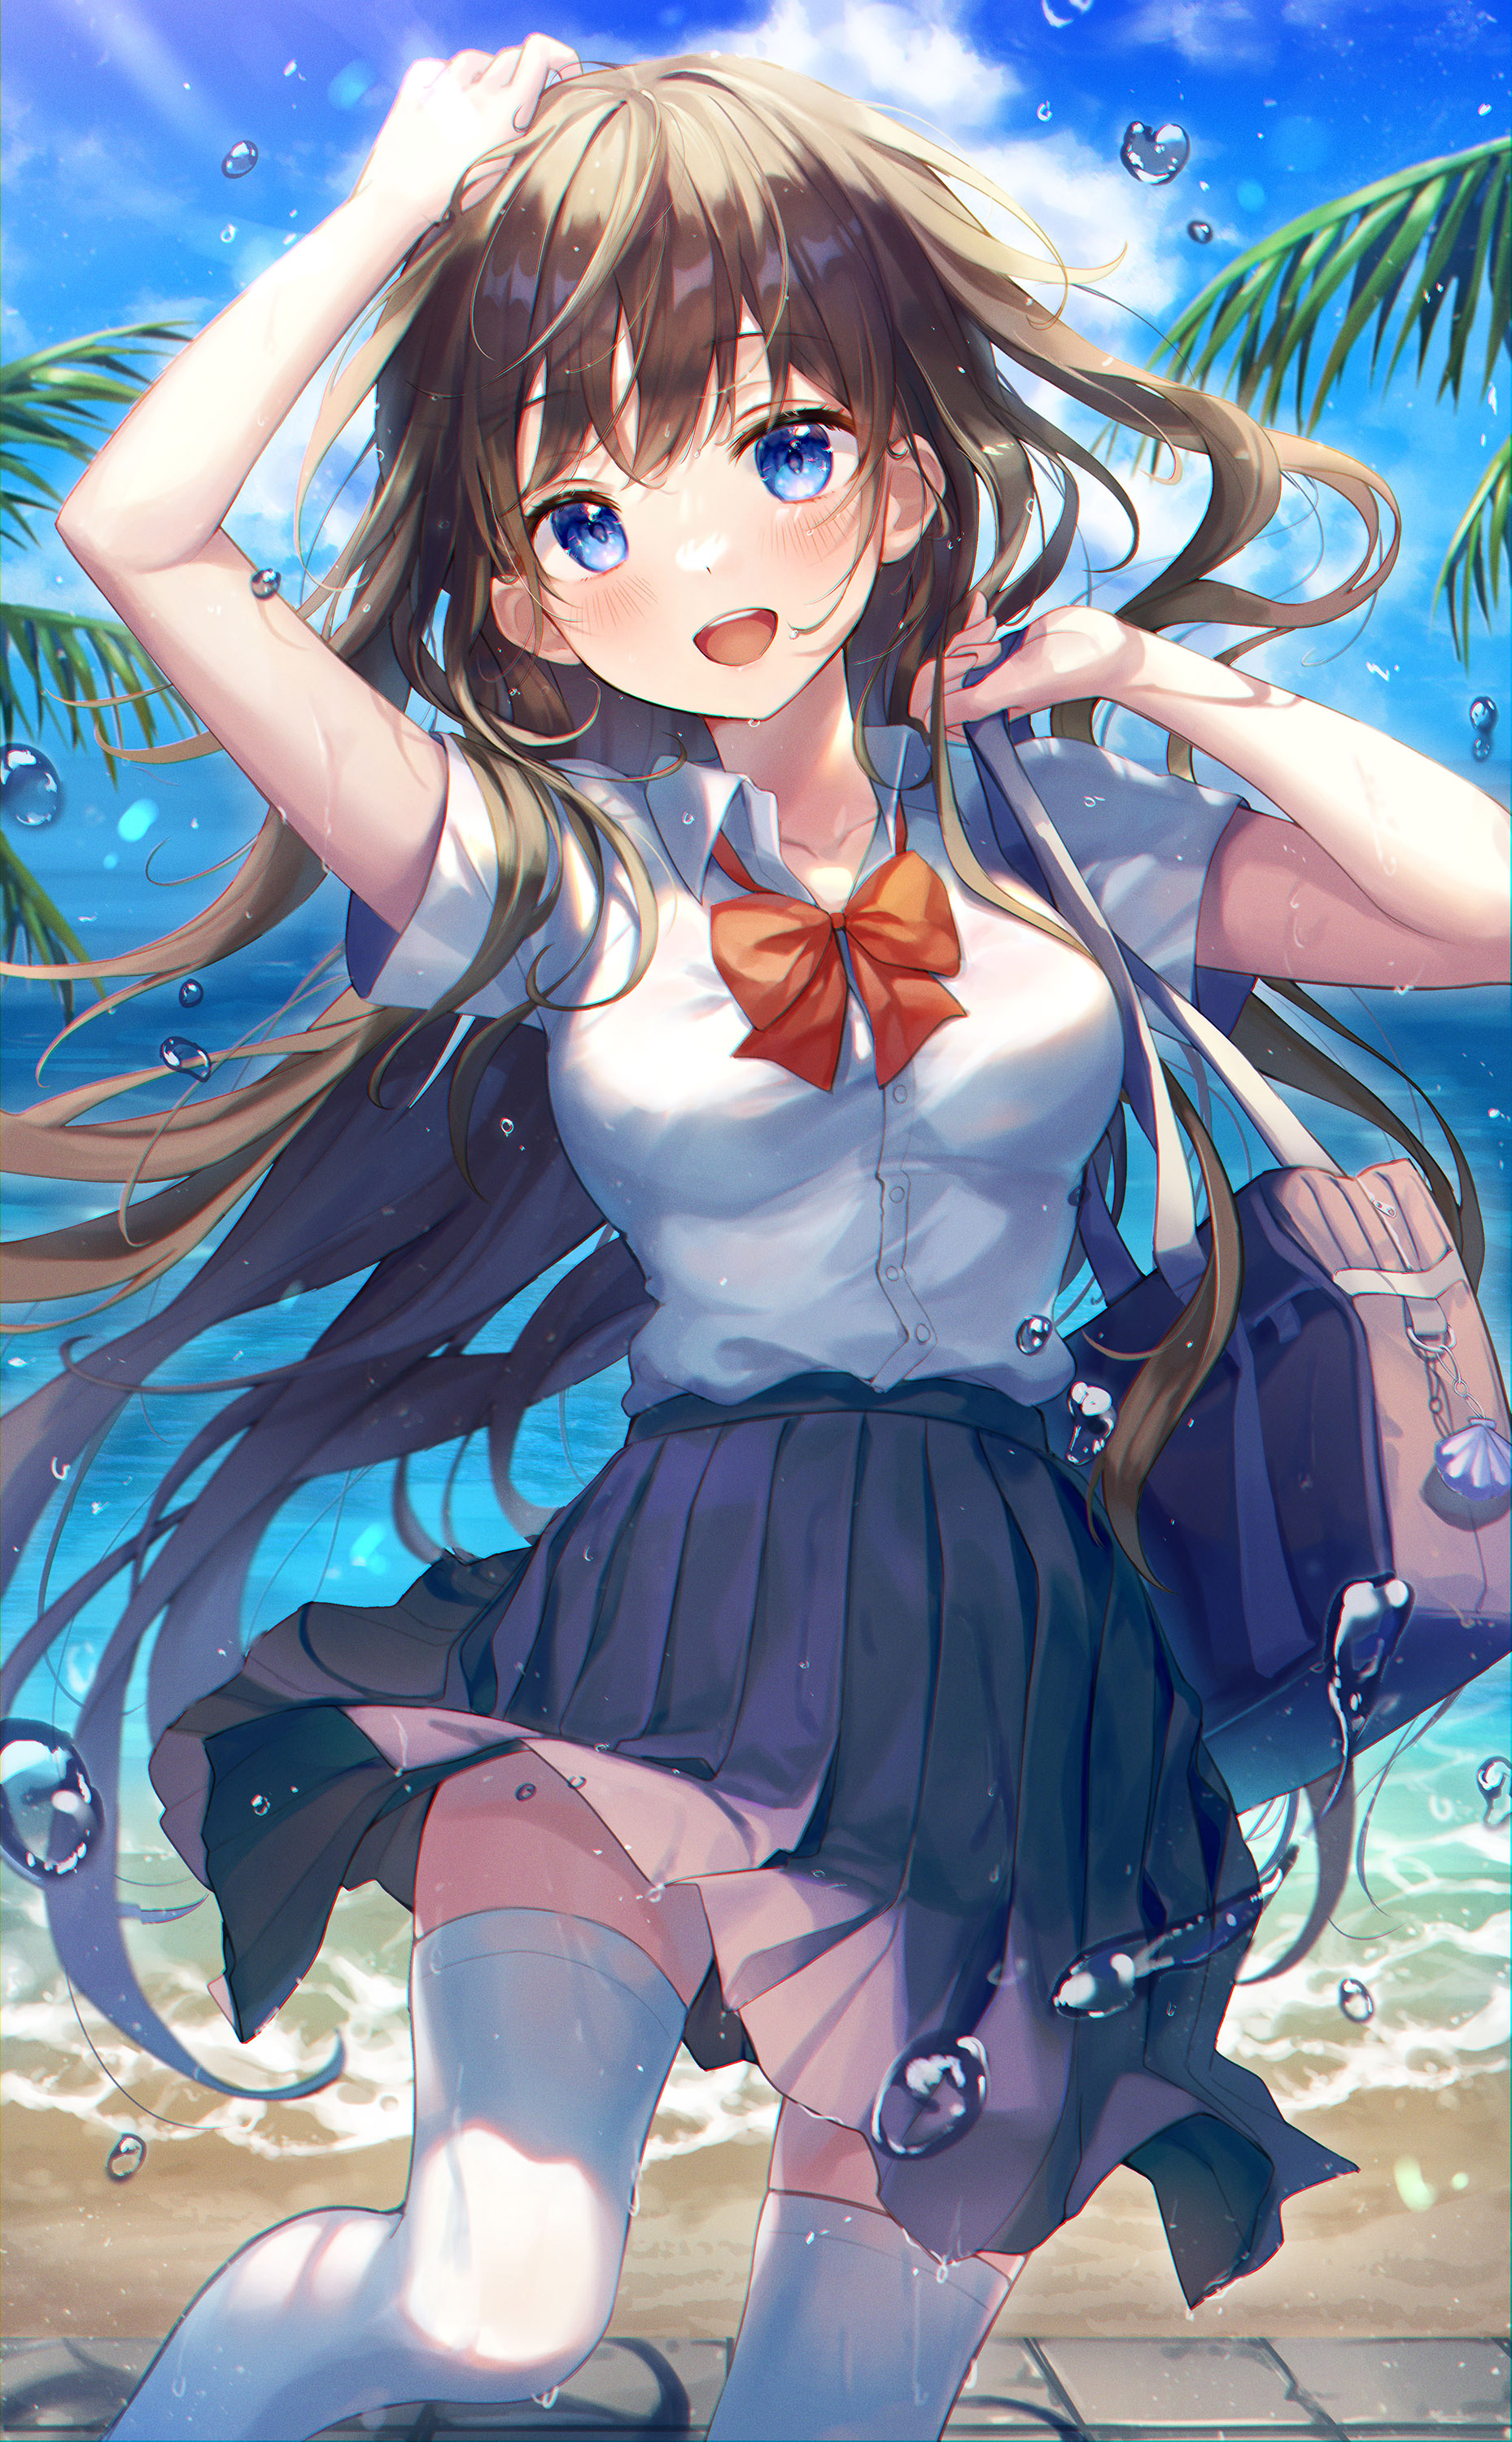 Aimbek Beach Clear Sky Anime Anime Girls Skirt Open Mouth Brunette Long Hair Blue Eyes Arms Up 1858x3000